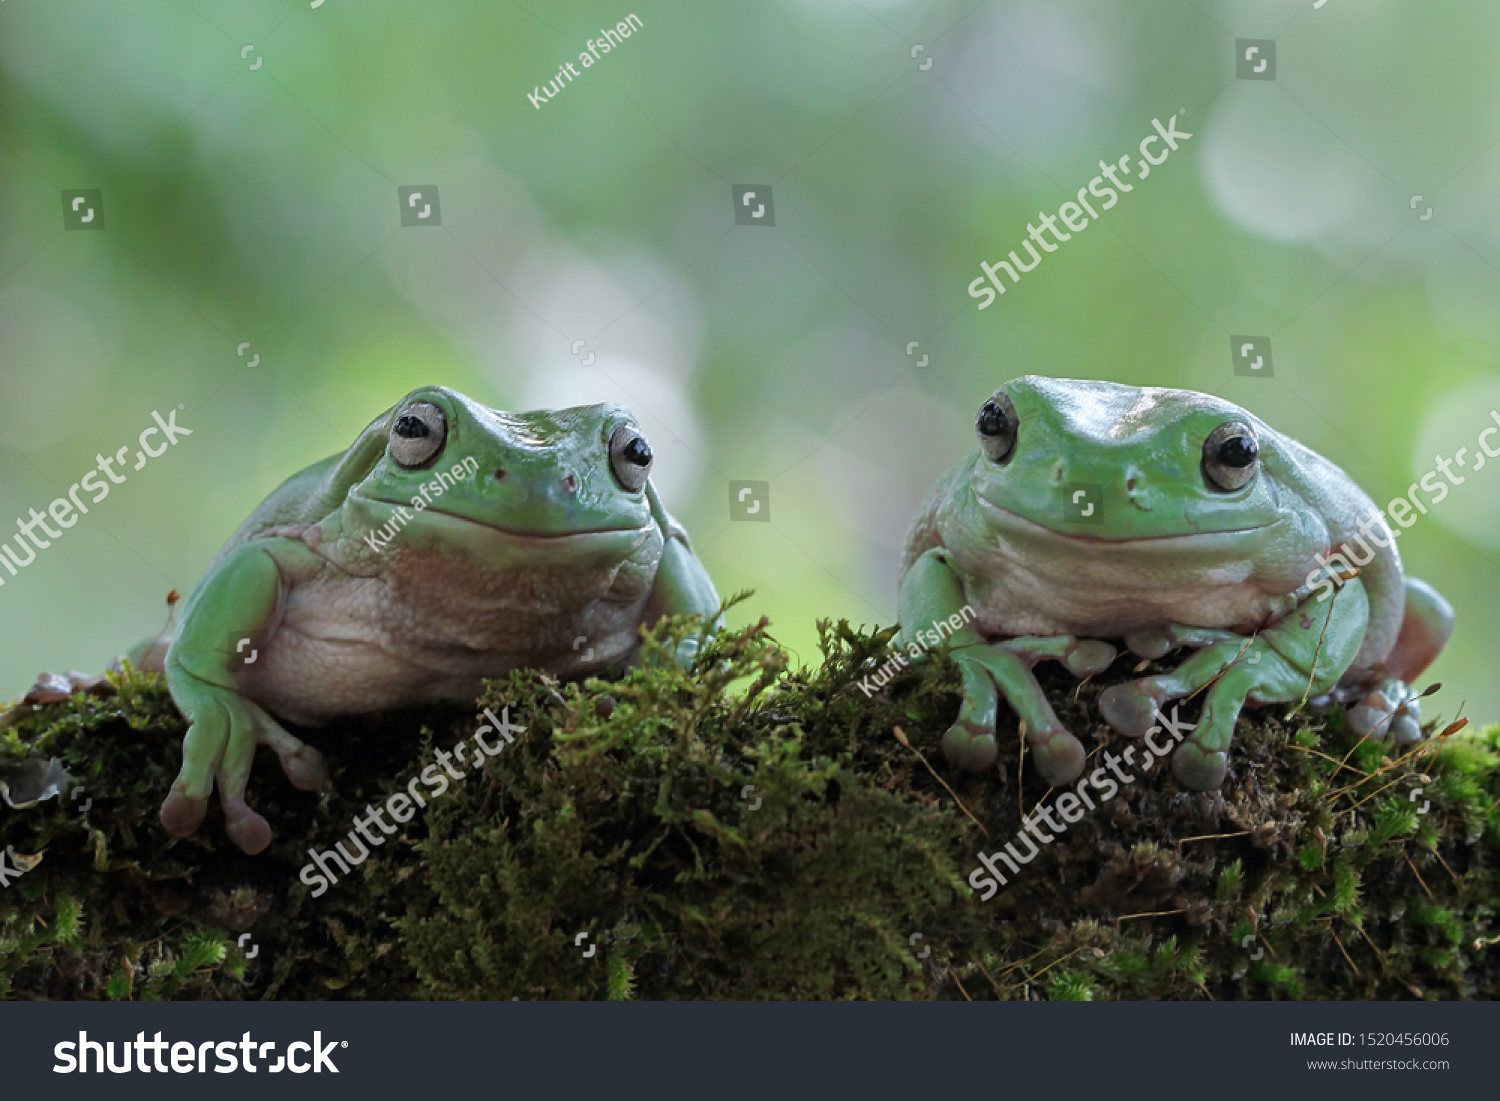 Dumpy frog "litoria caerulea" on moss, Dumpy frog on branch, tree frog on branch, amphibian closeup #1520456006